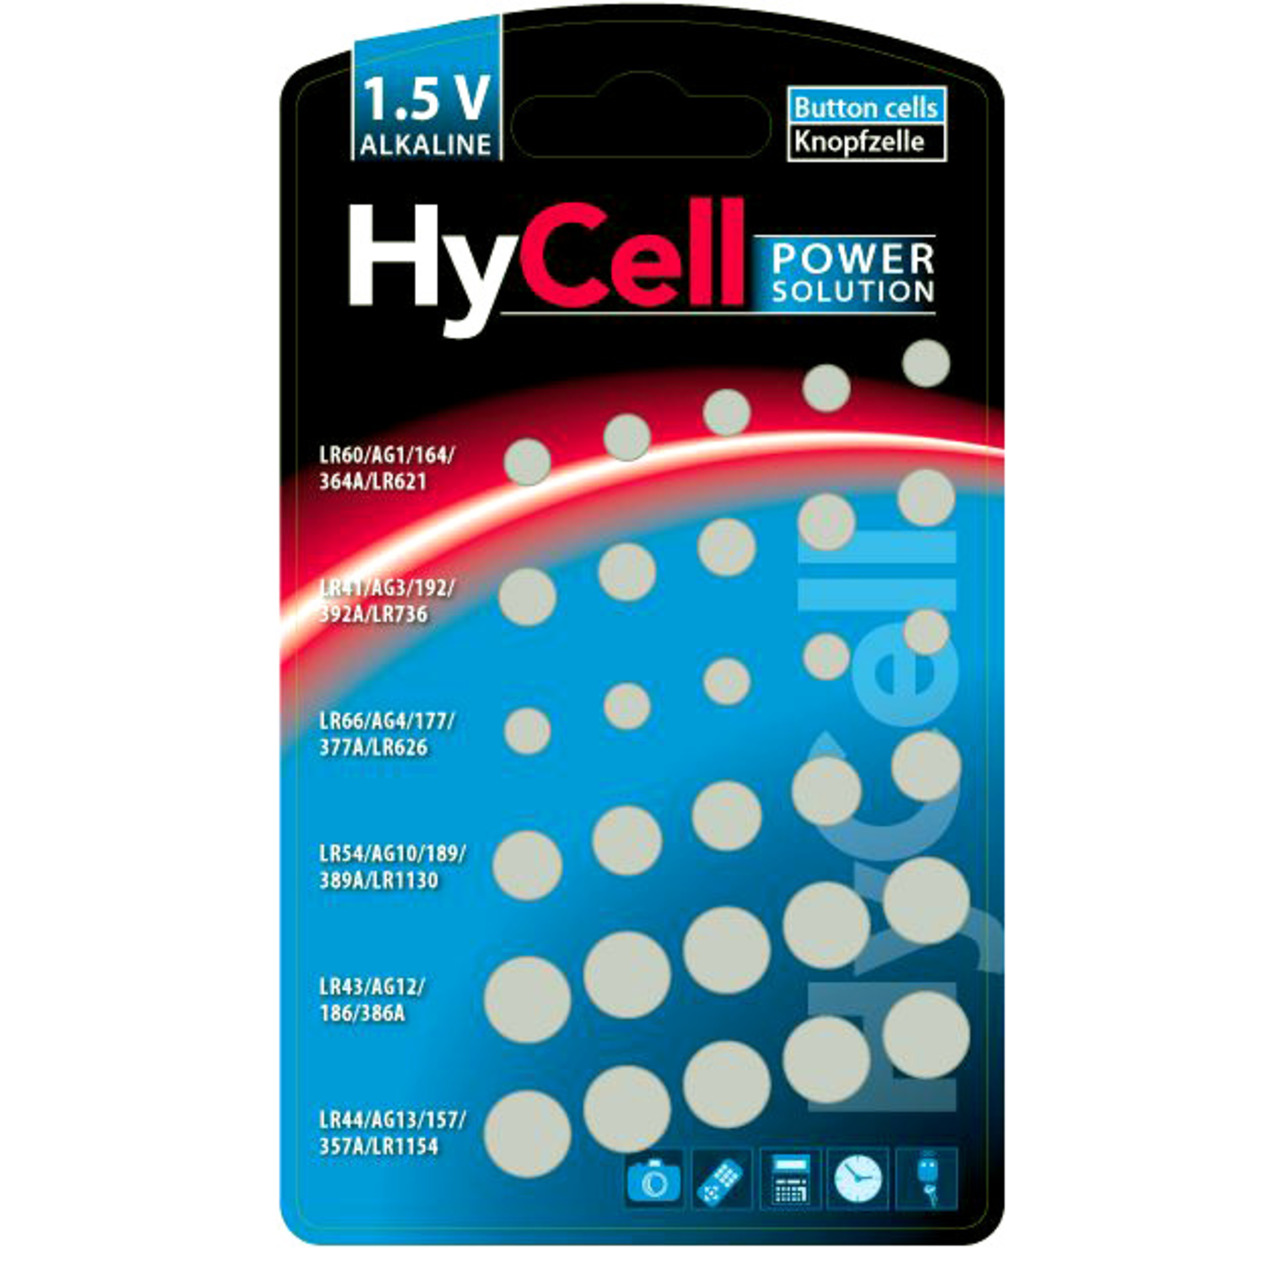 Hycell Alkaline-Knopfzellen-Set- 1-5 V- 30 Stck